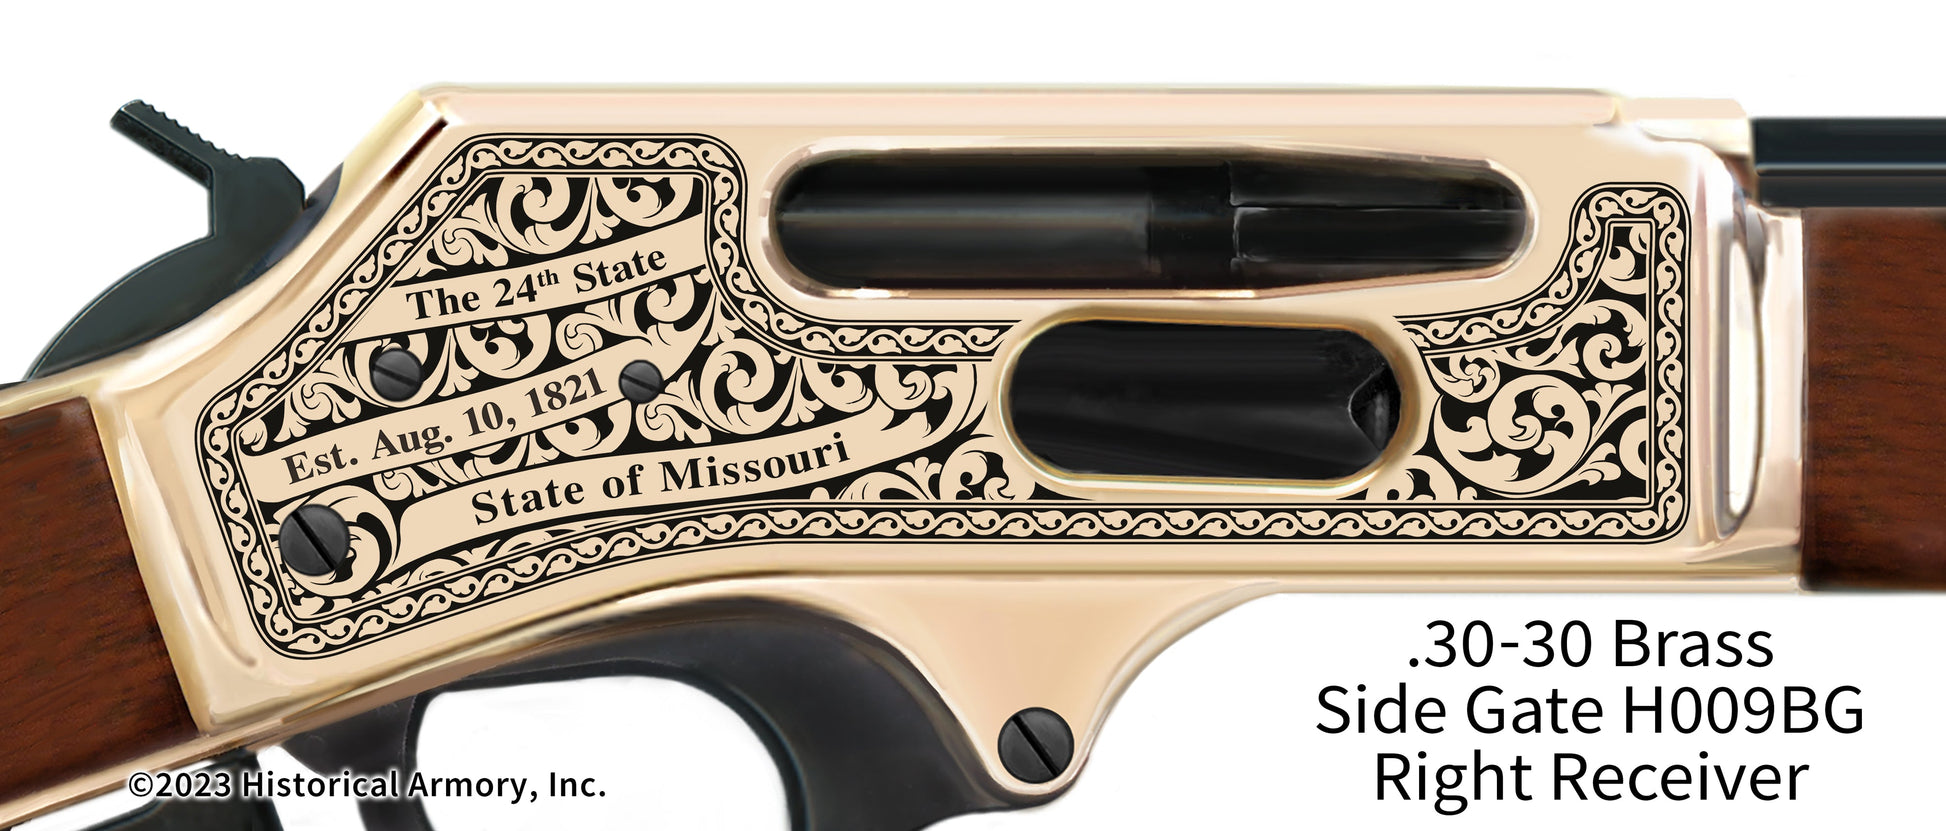 Cedar County Missouri Engraved Henry .30-30 Brass Side Gate Rifle